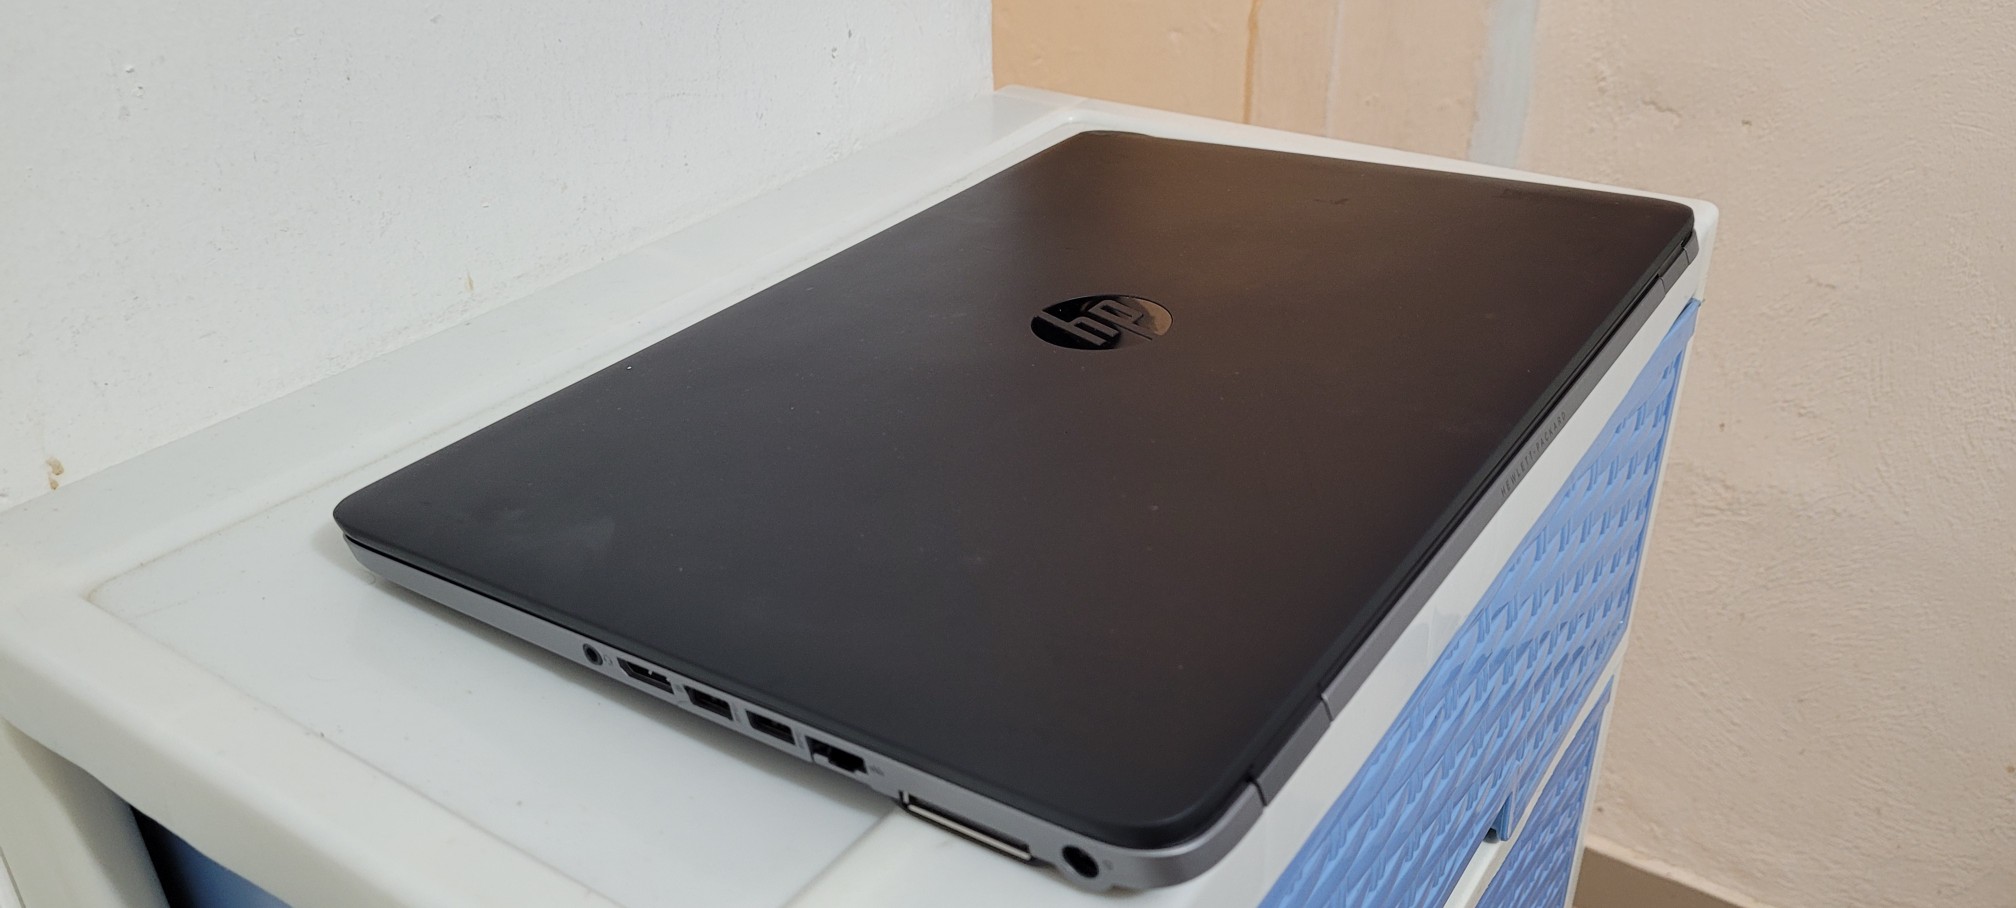 computadoras y laptops - hp Elitebook 17 Pulg Core i7 Ram 16gb Disco SSD 500GB Video 8gb 2